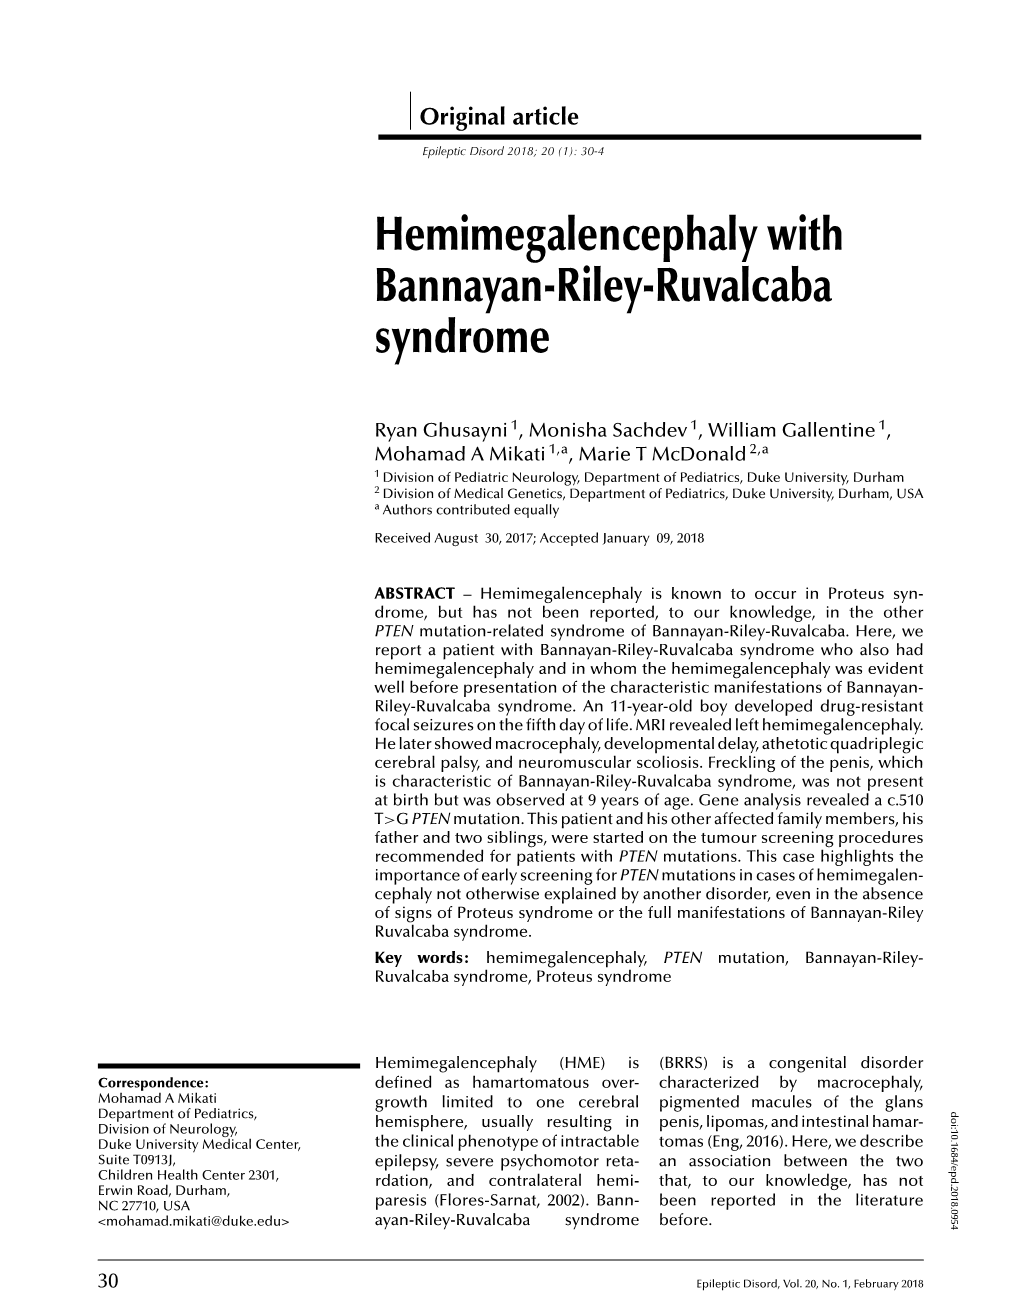 Hemimegalencephaly with Bannayan-Riley-Ruvalcaba Syndrome